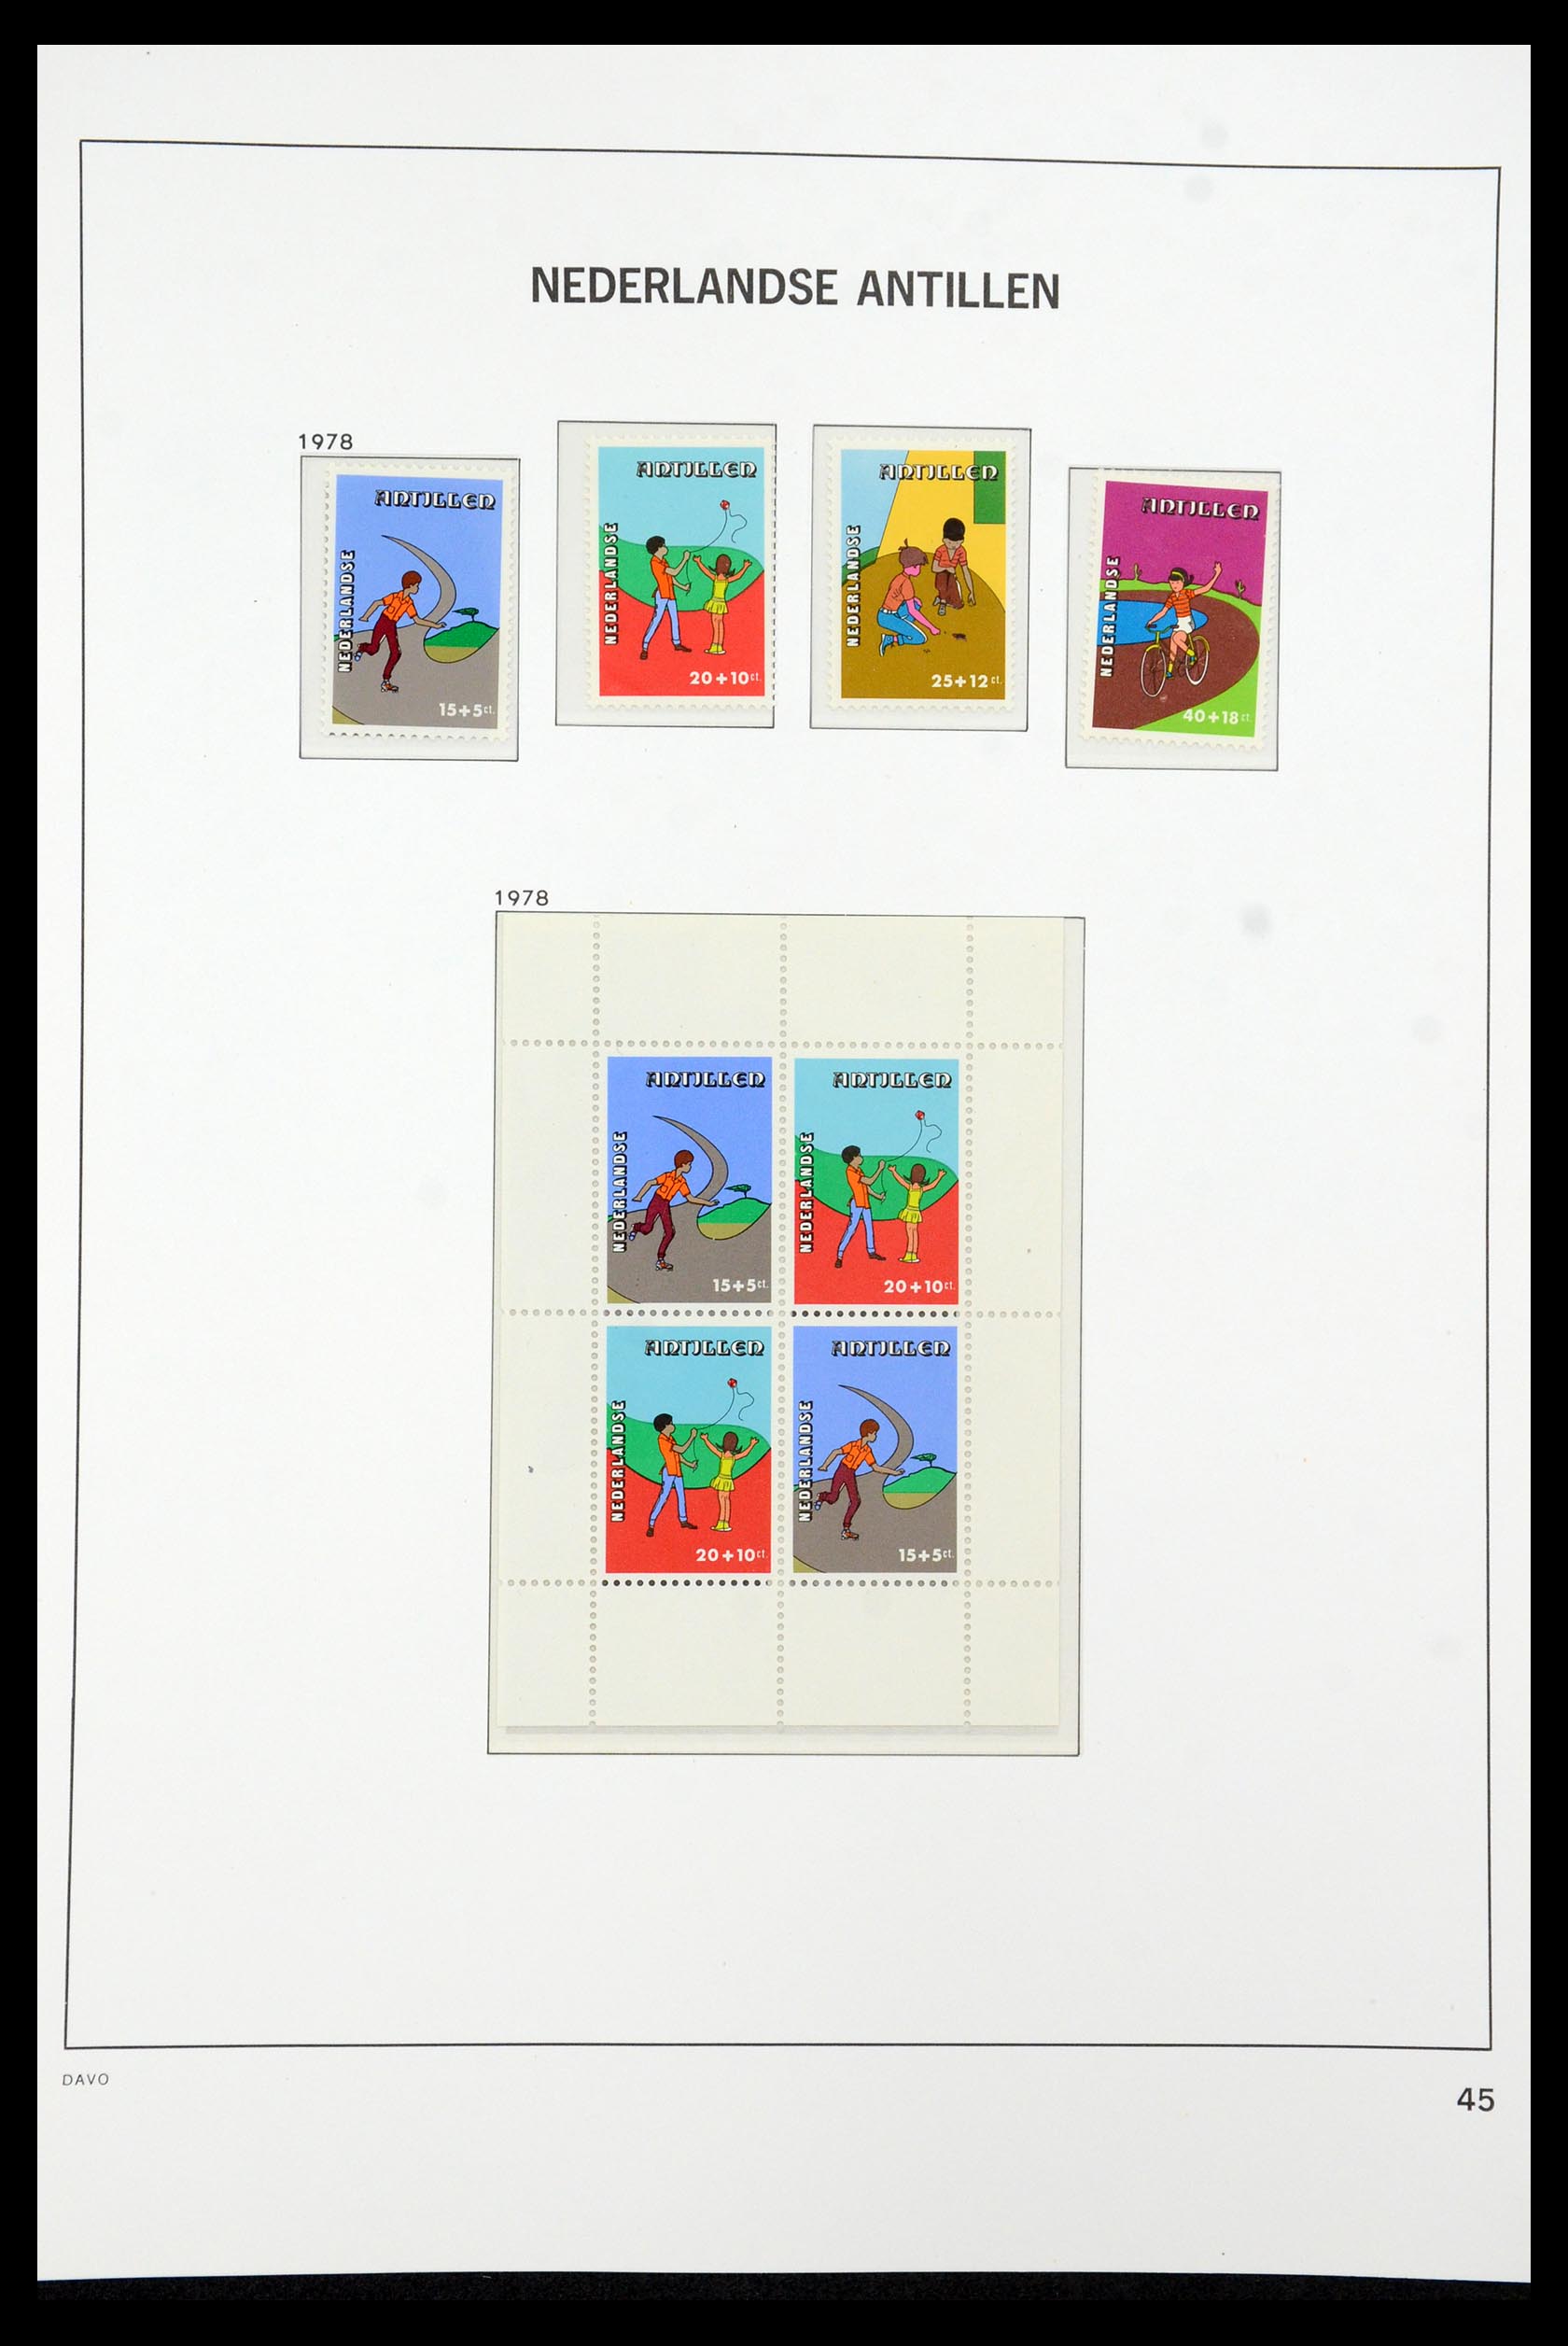 36393 033 - Stamp collection 36393 Netherlands Antilles 1949-2010.